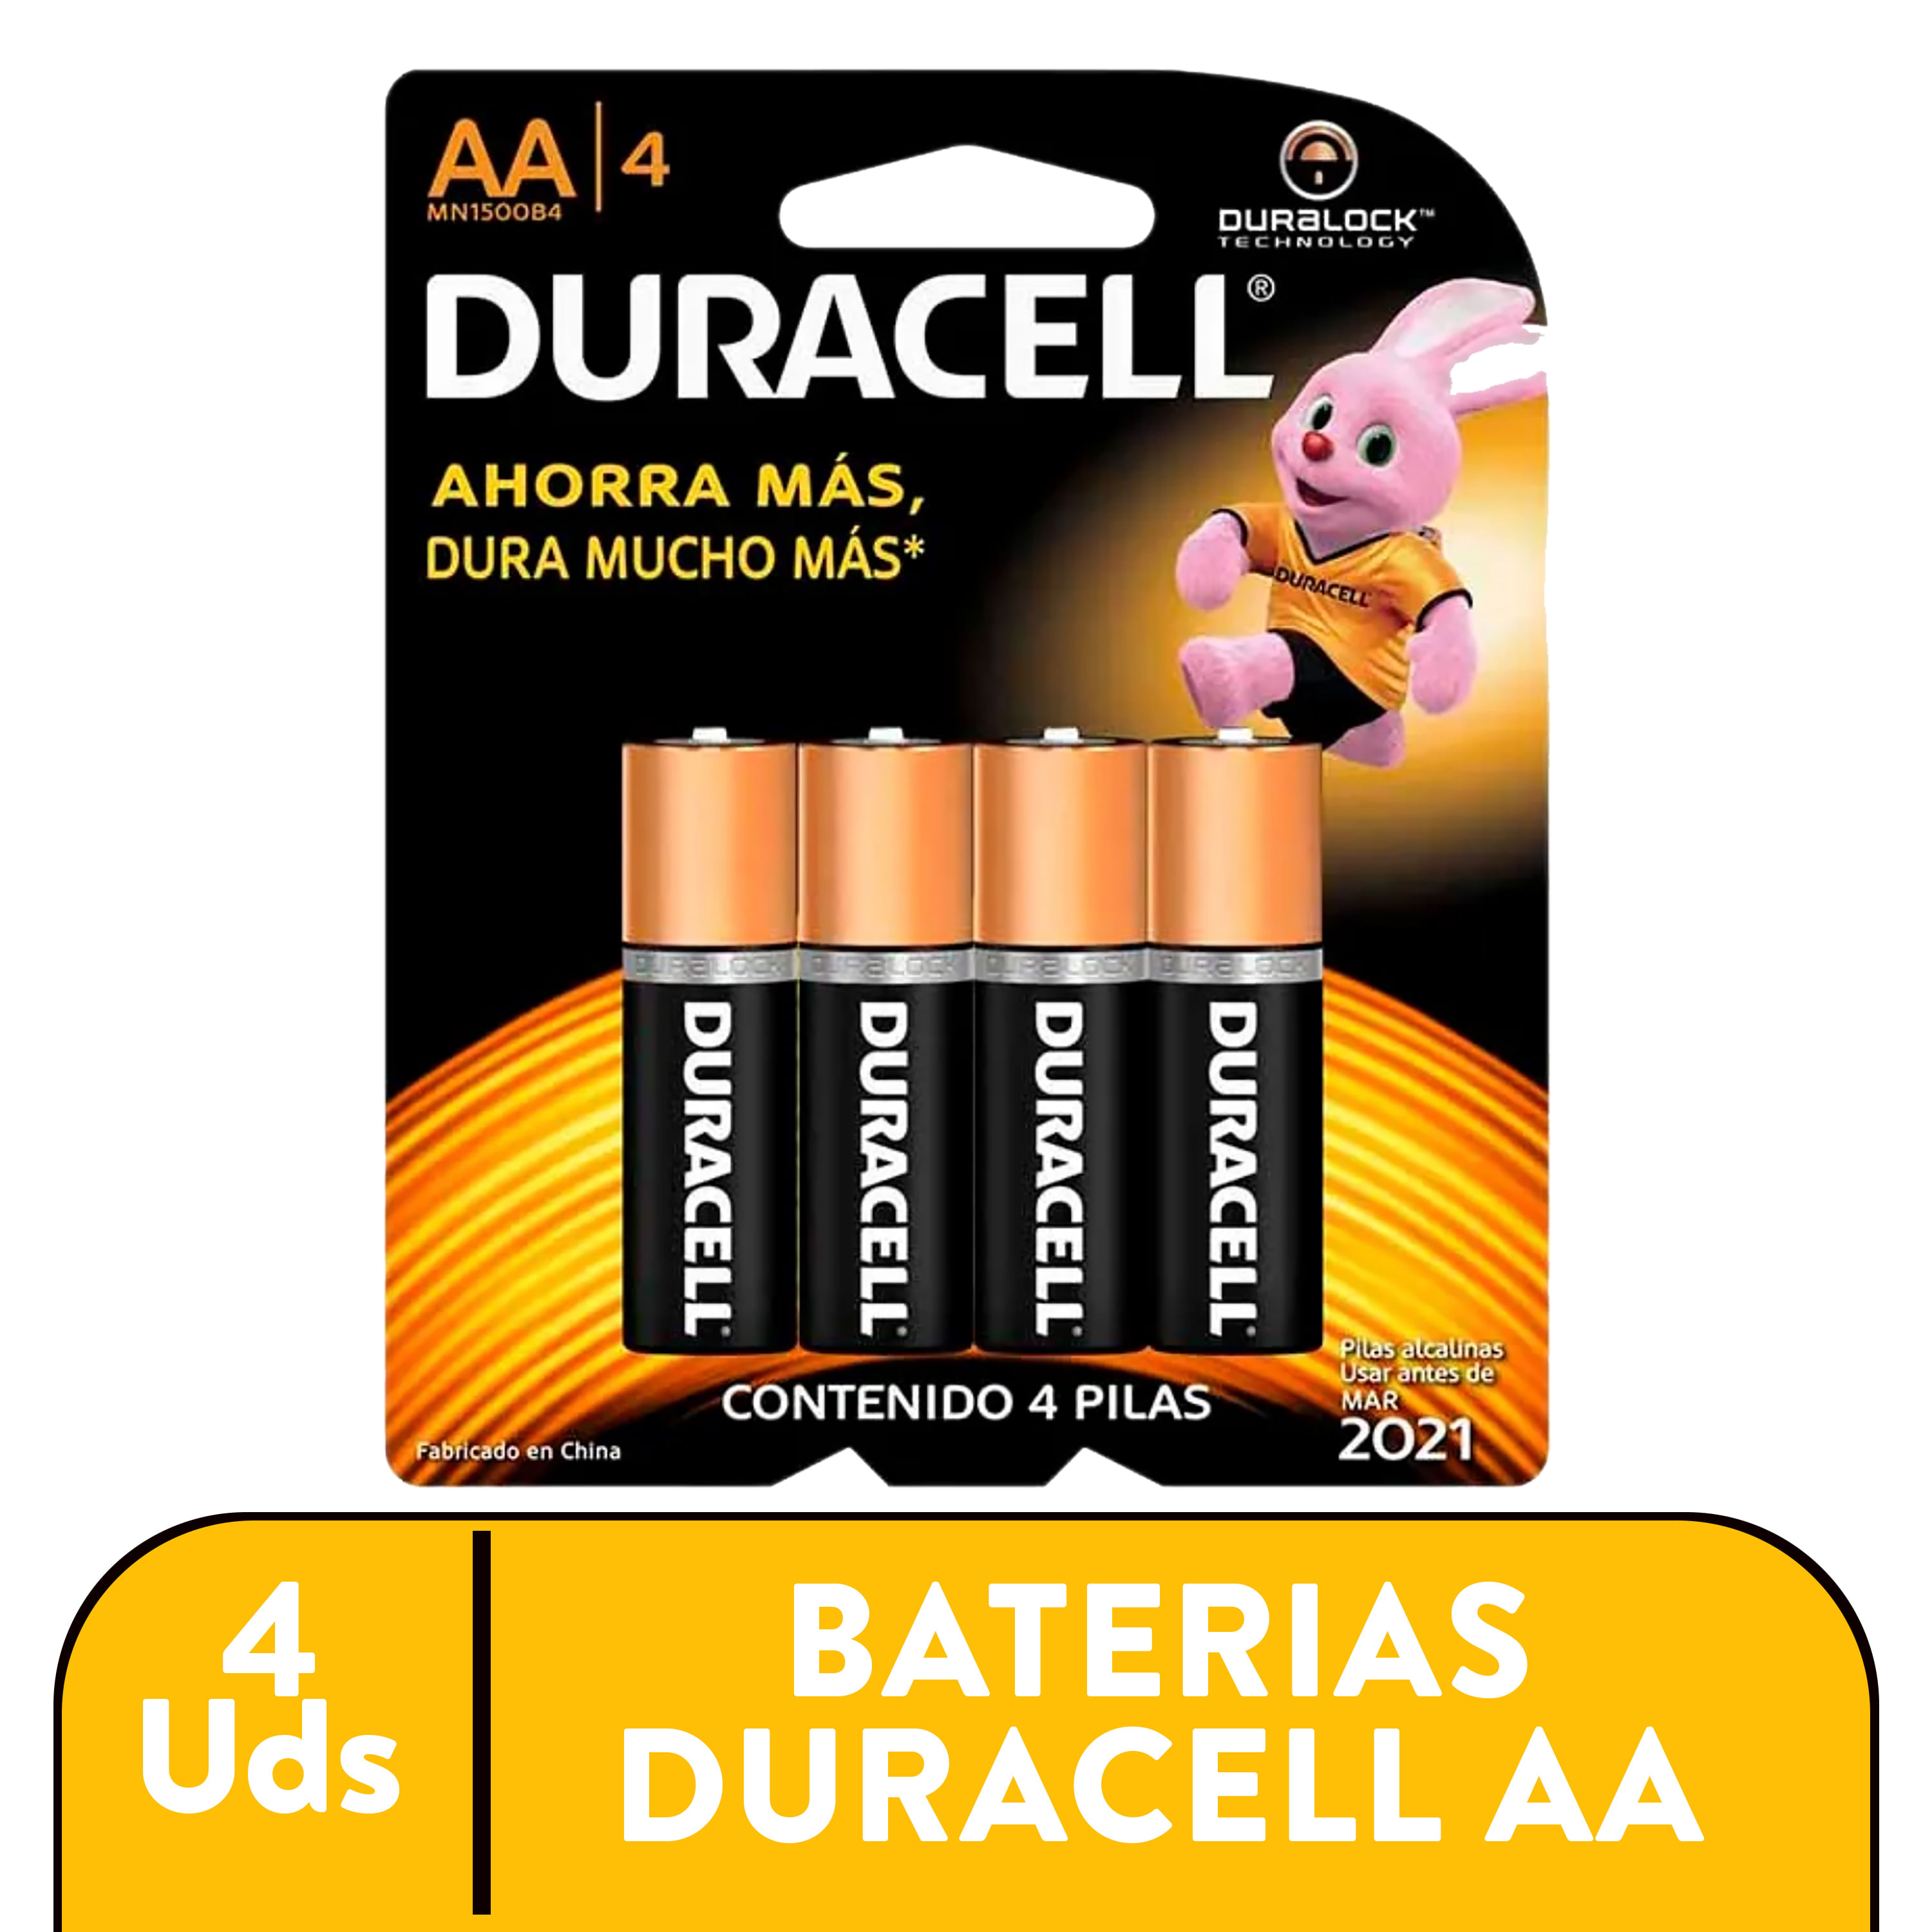  DUR5008285  Duracell - Optimum Piles Alcaline AA - paquet de 12